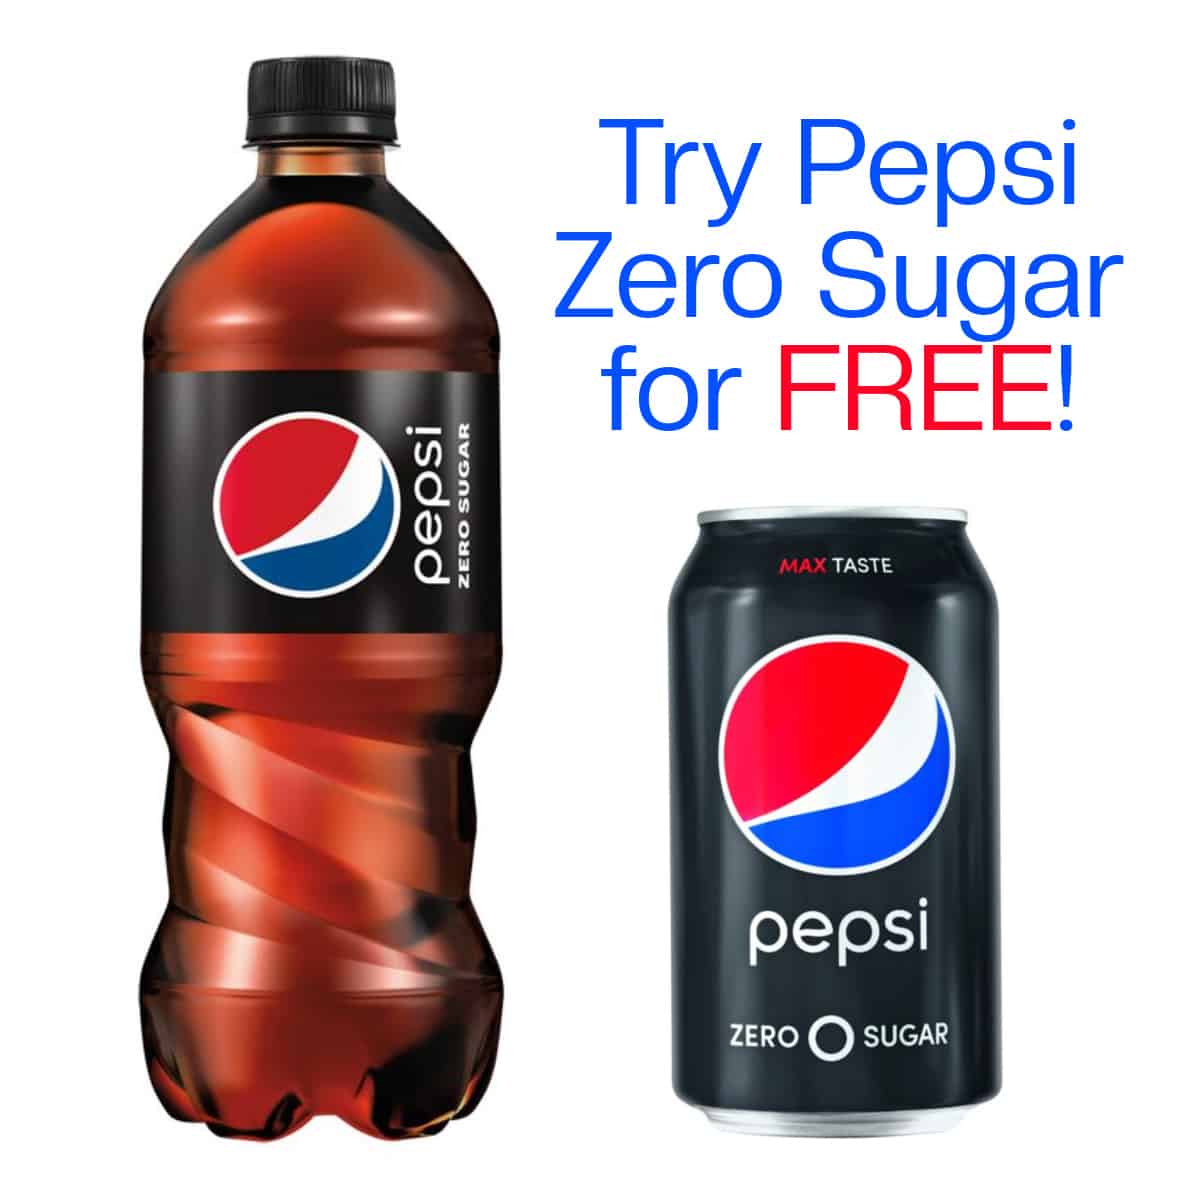 free-pepsi-zero-sugar-rebate-thrifty-jinxy